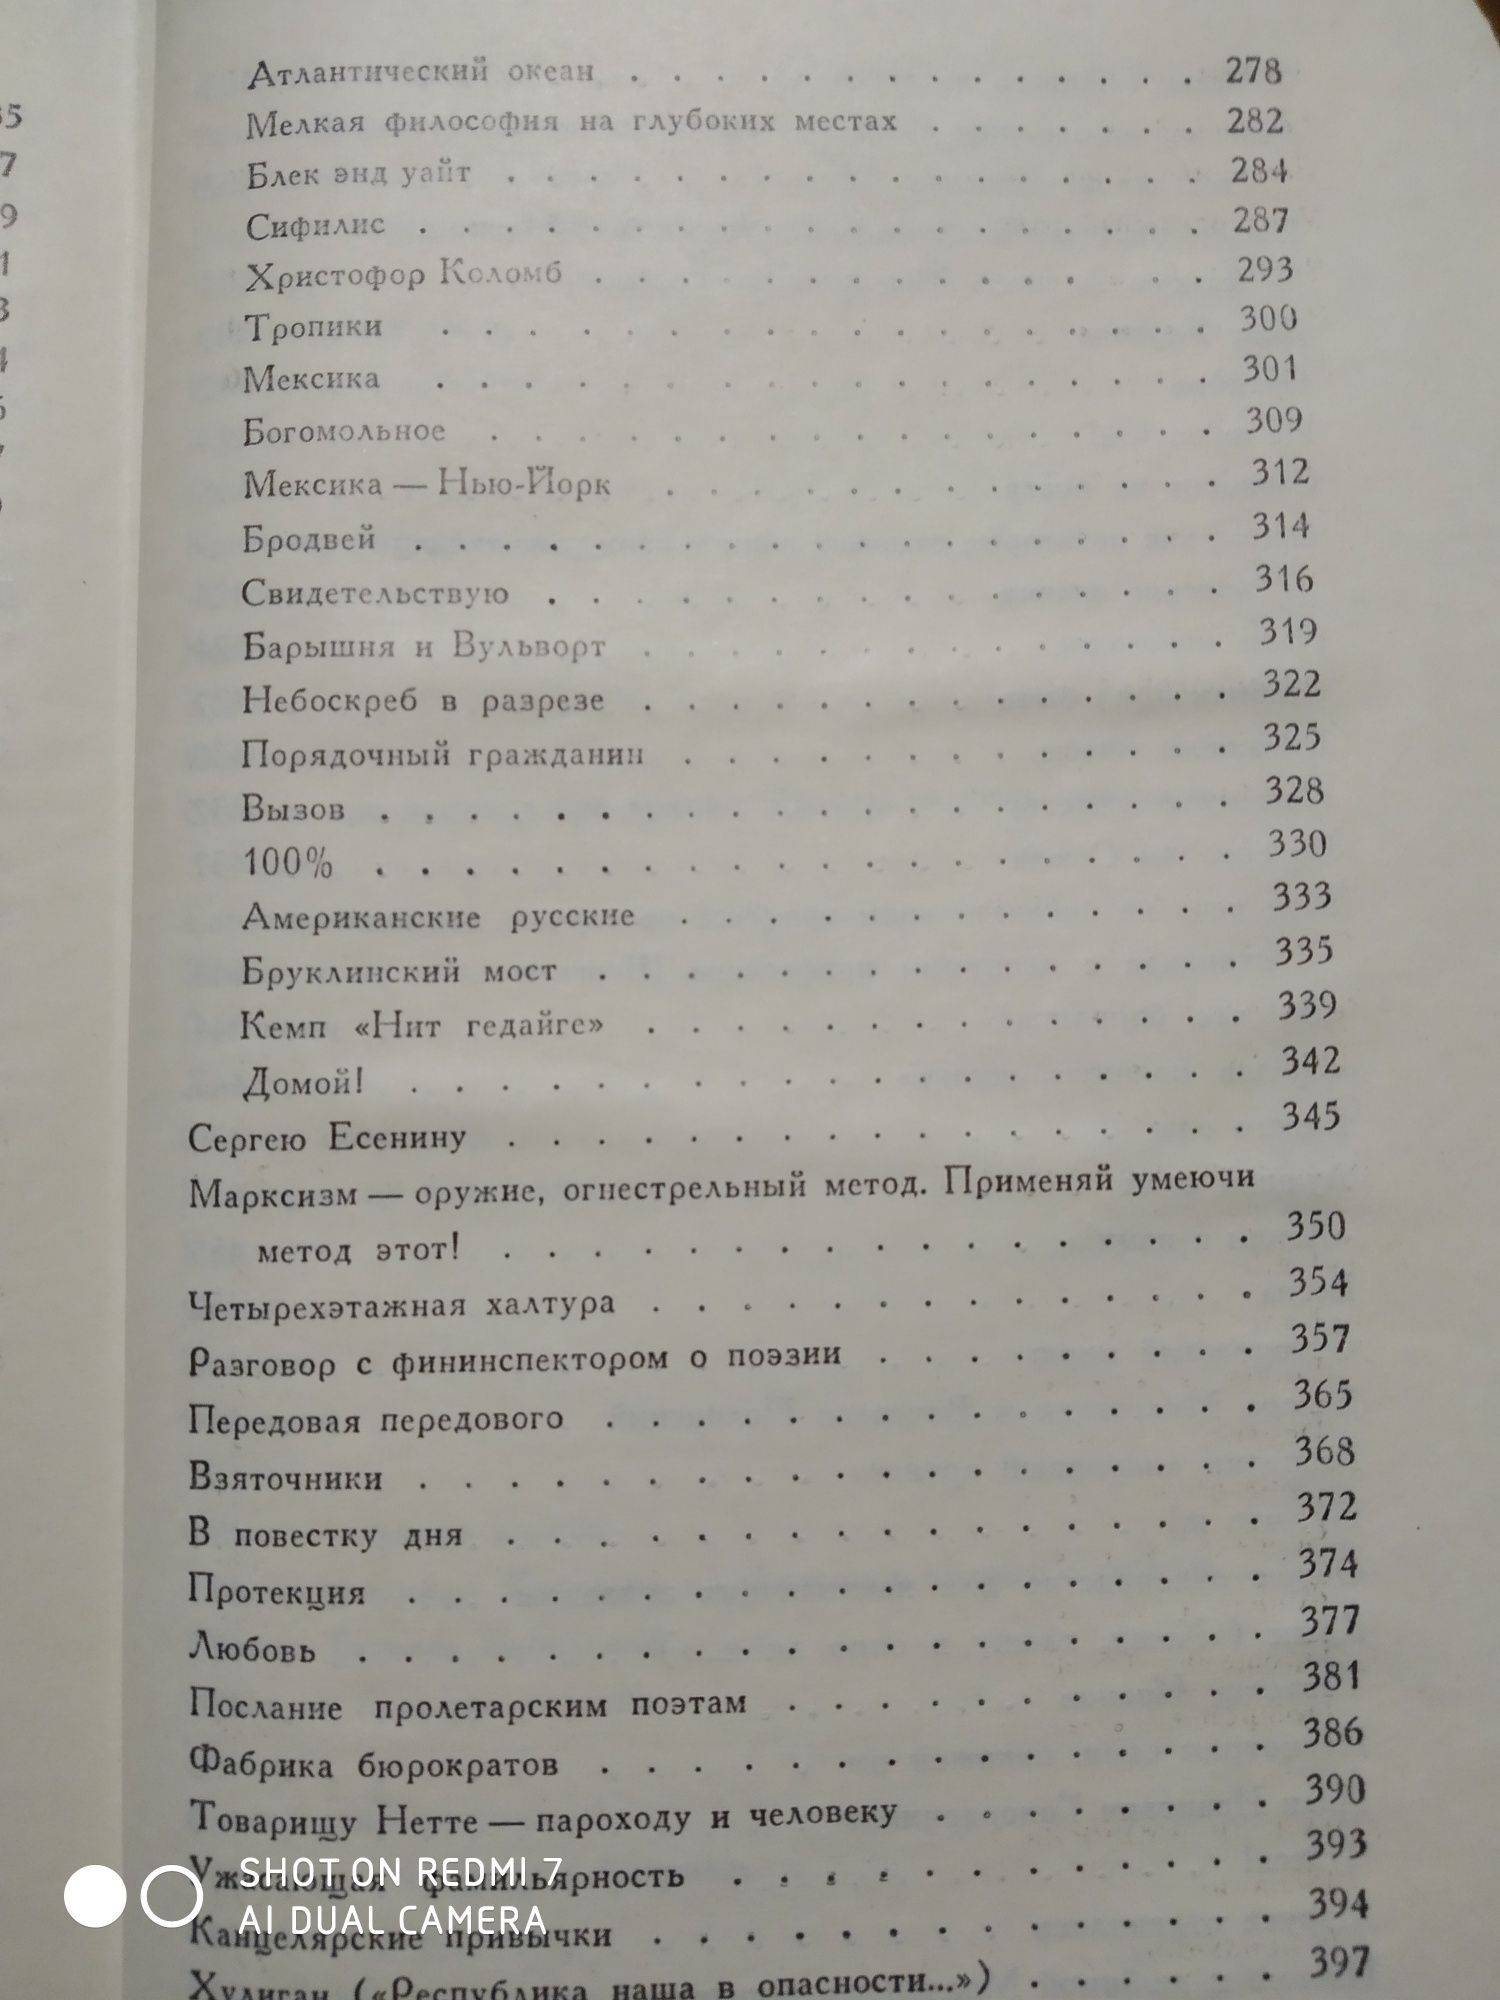 Книги Владимира Маяковского, 2 тома.